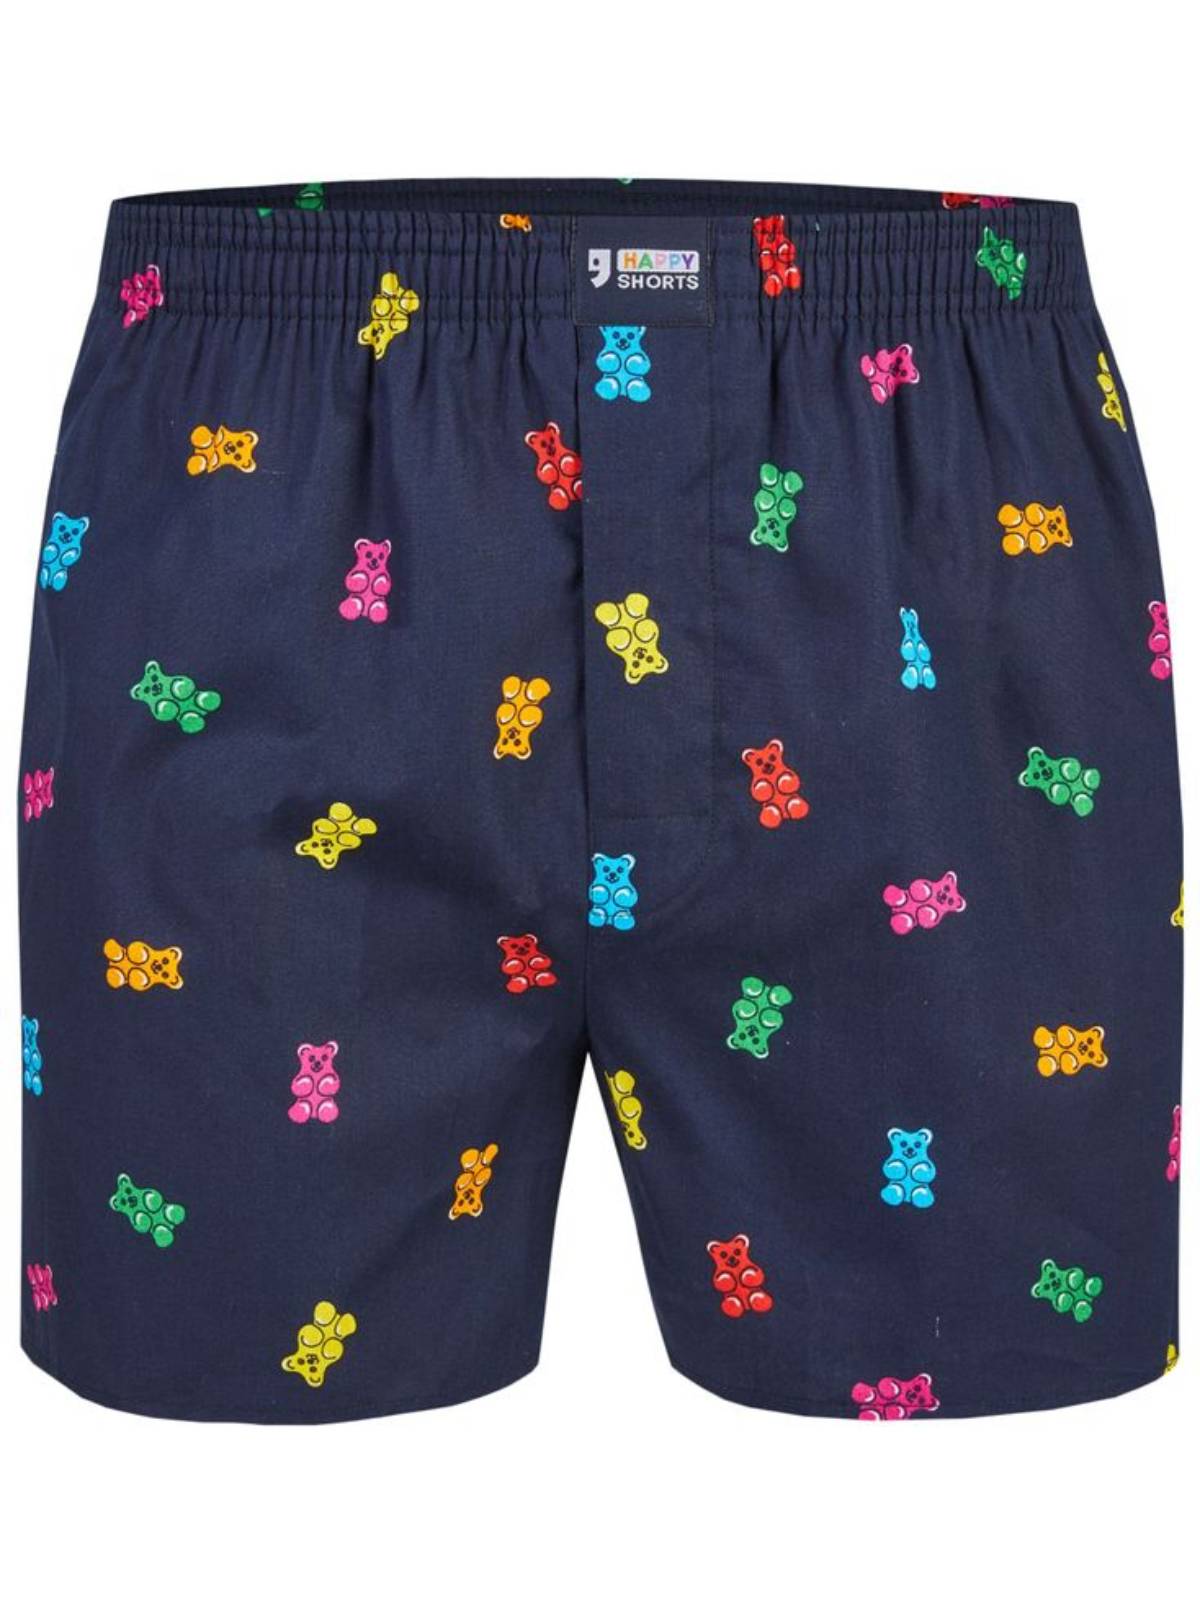 Happy Shorts Boxer Gummi Bears